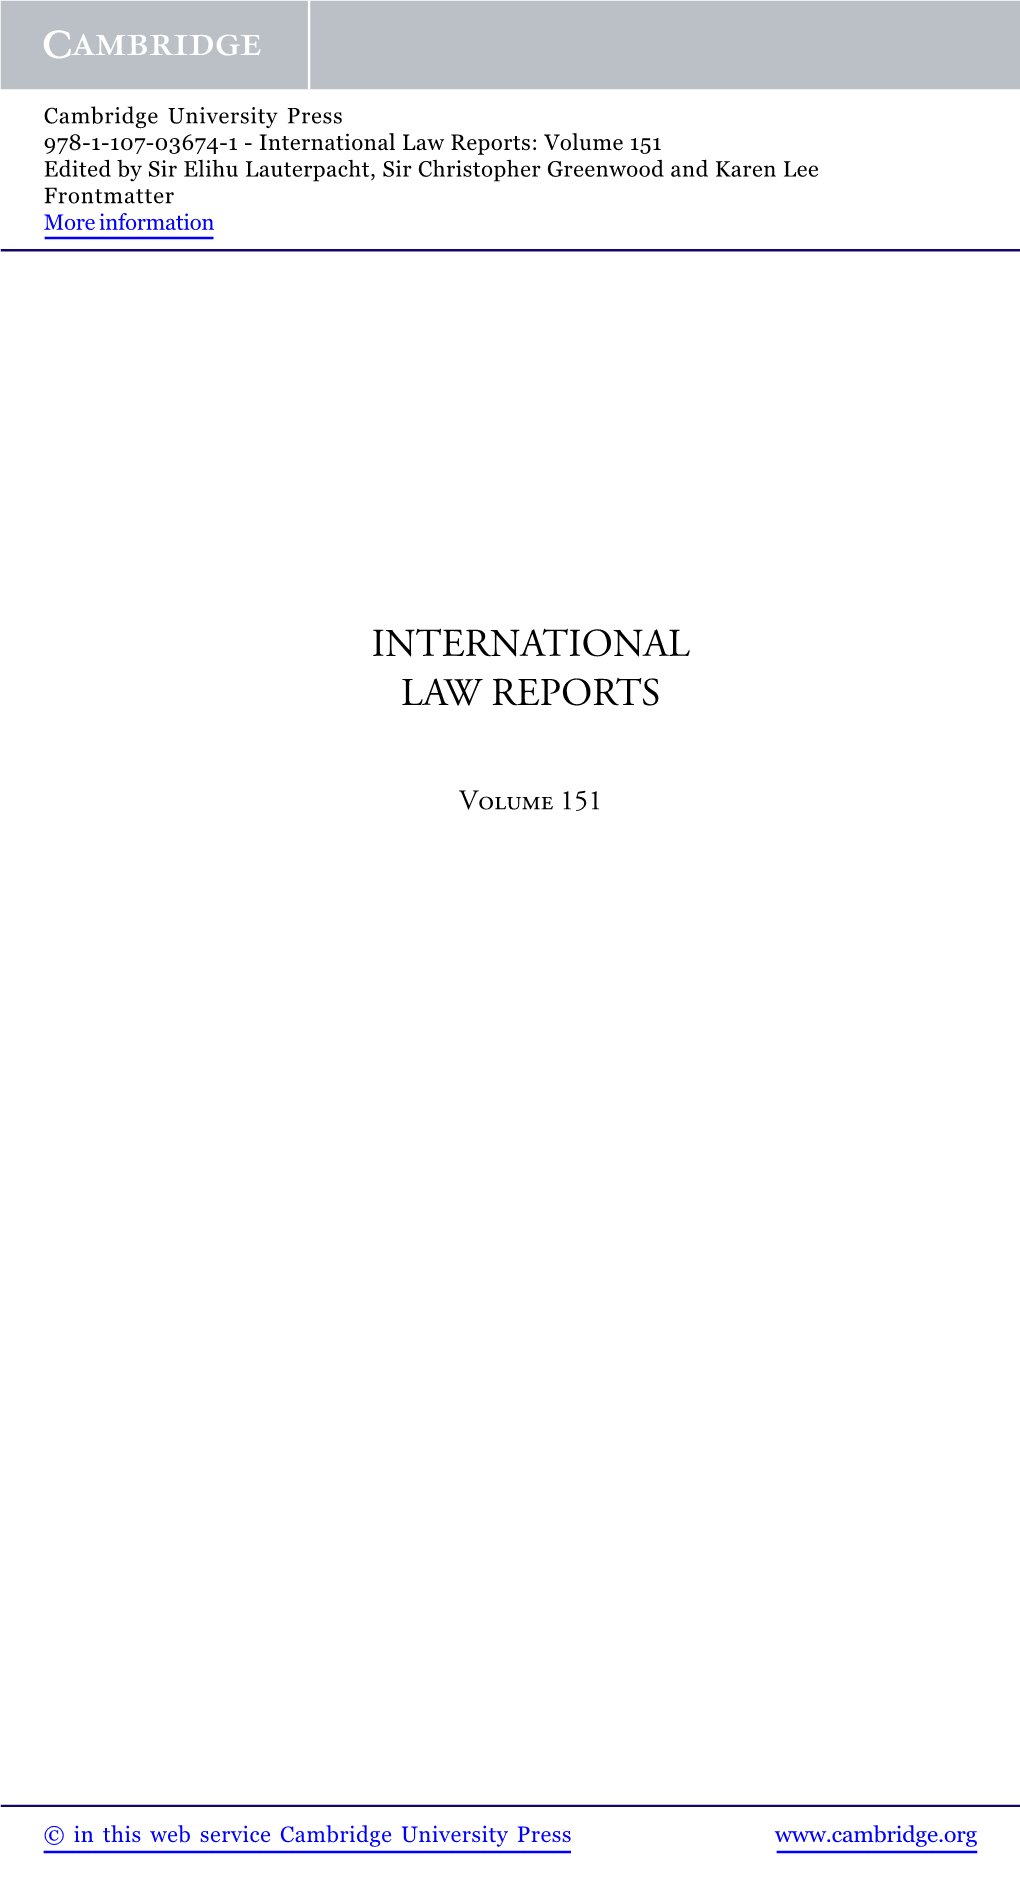 International Law Reports: Volume 151 Edited by Sir Elihu Lauterpacht, Sir Christopher Greenwood and Karen Lee Frontmatter More Information